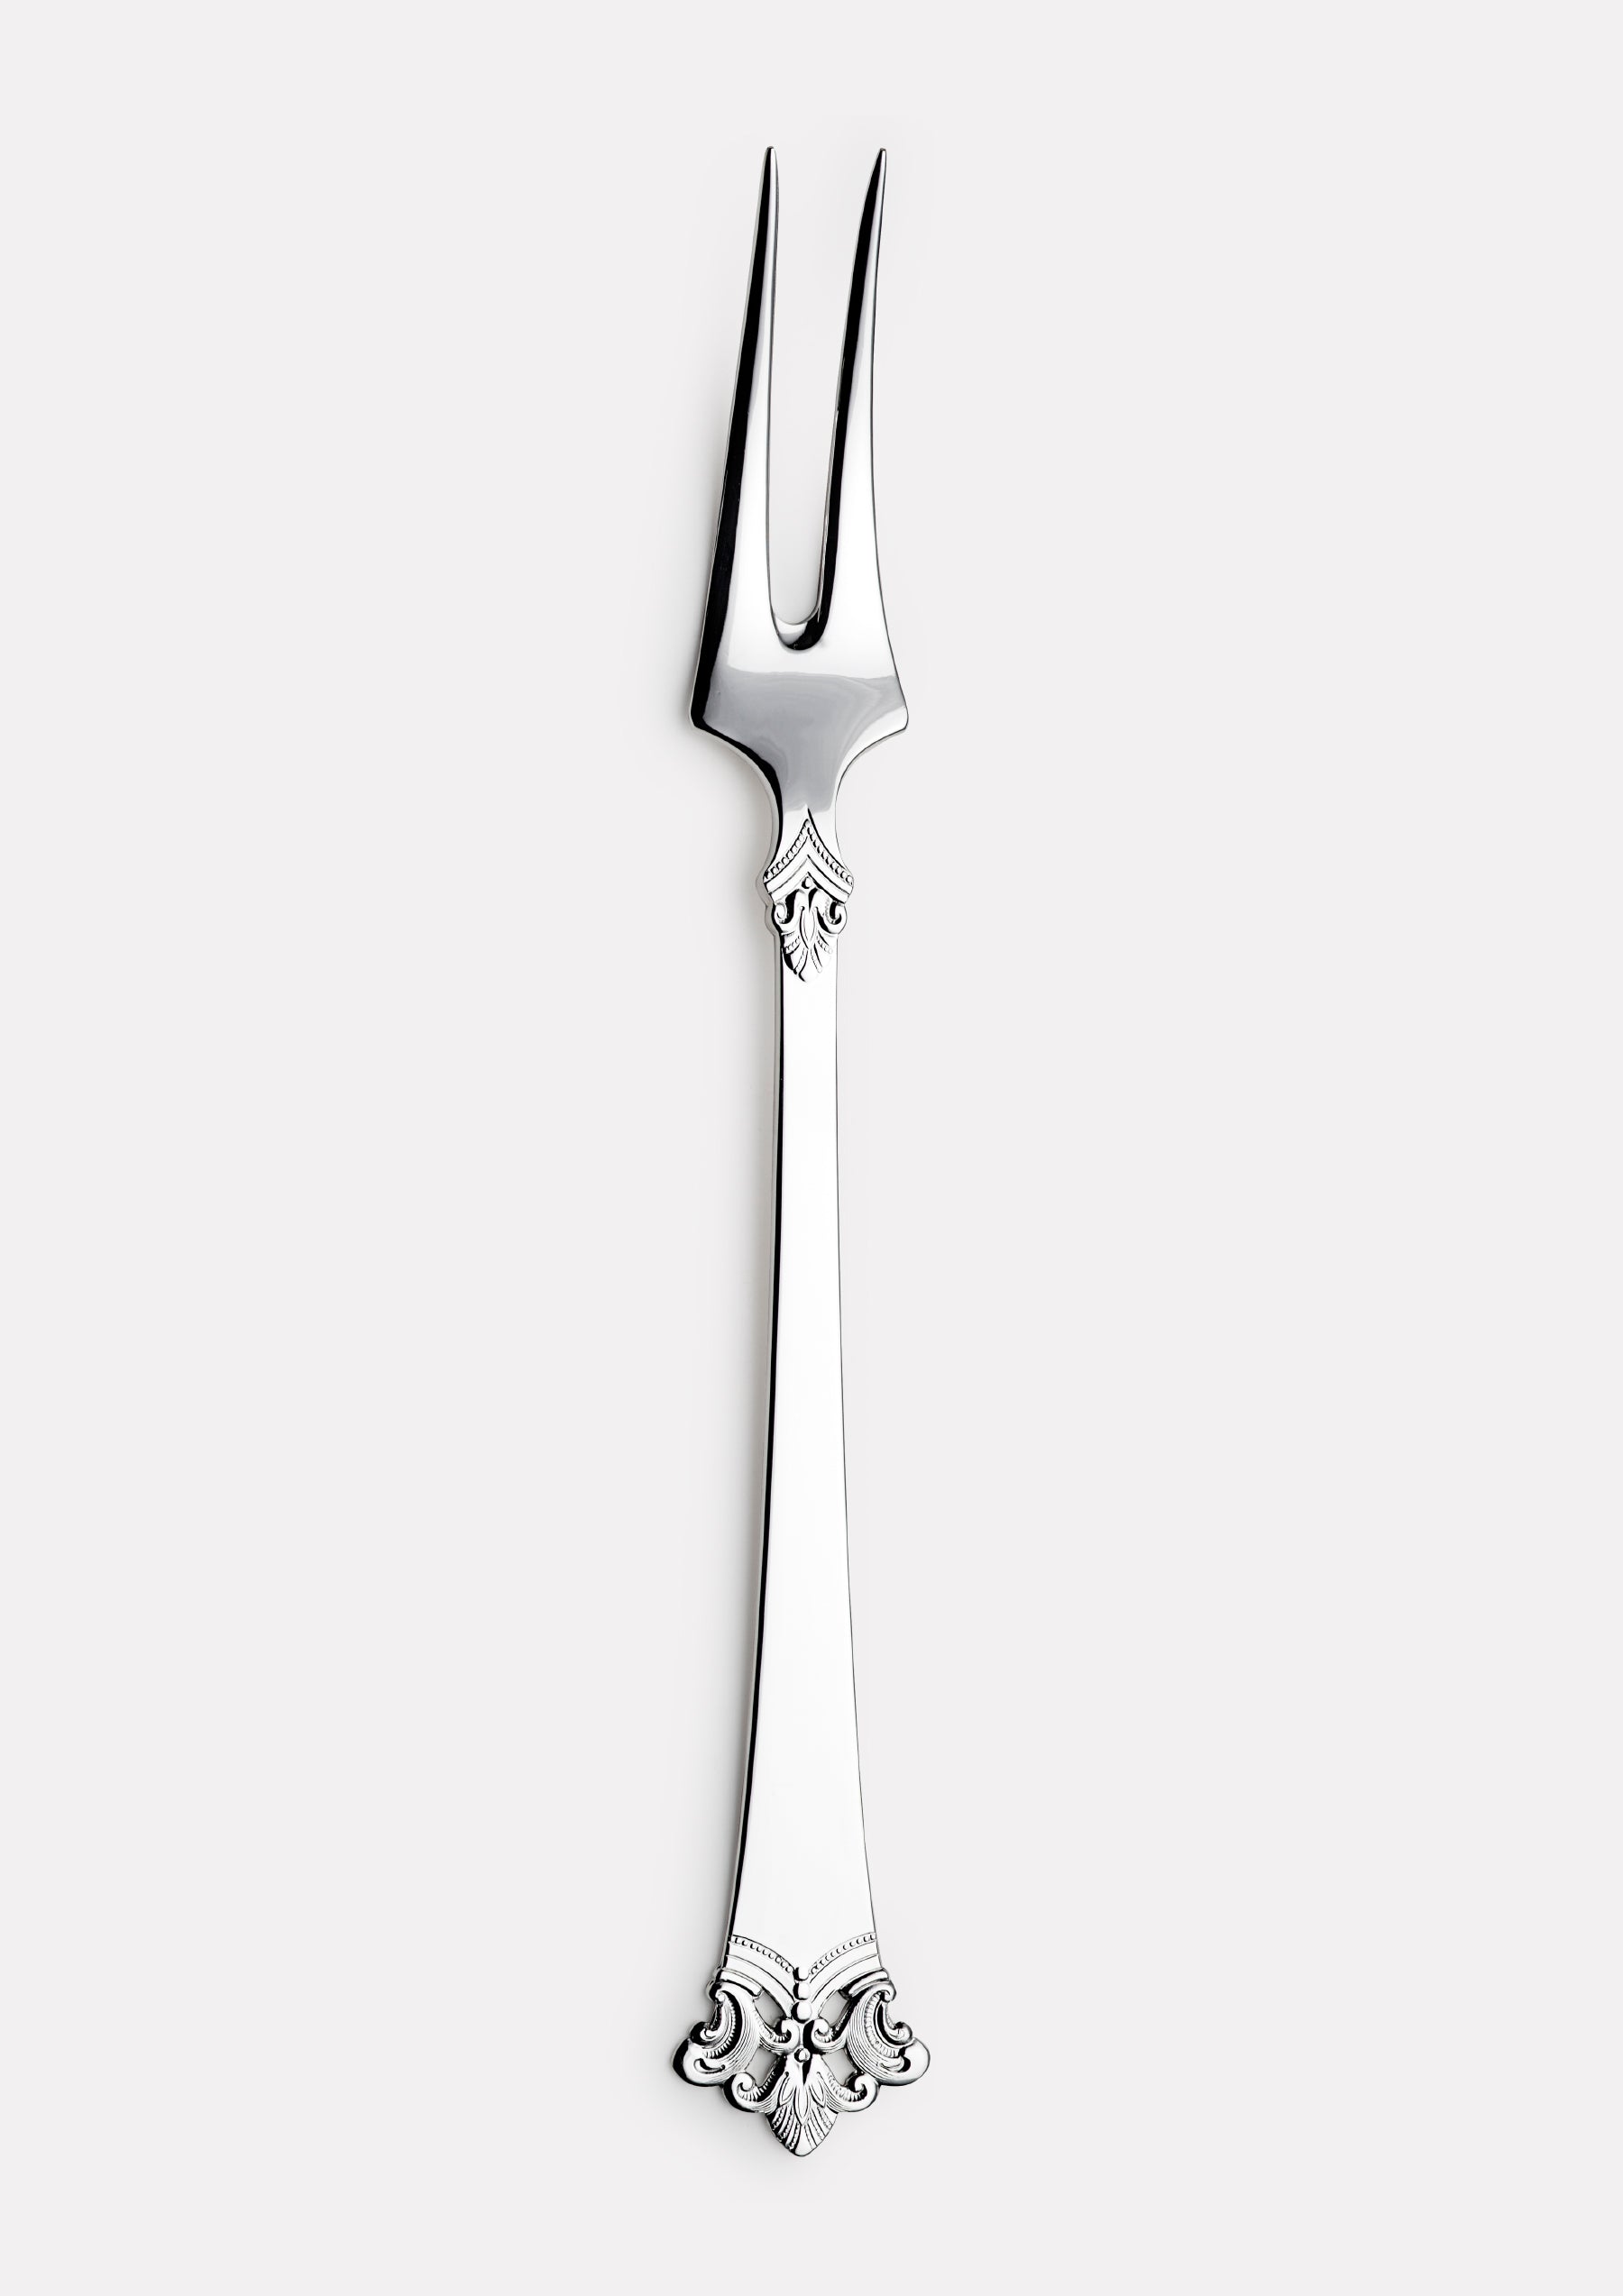 Anitra serving fork